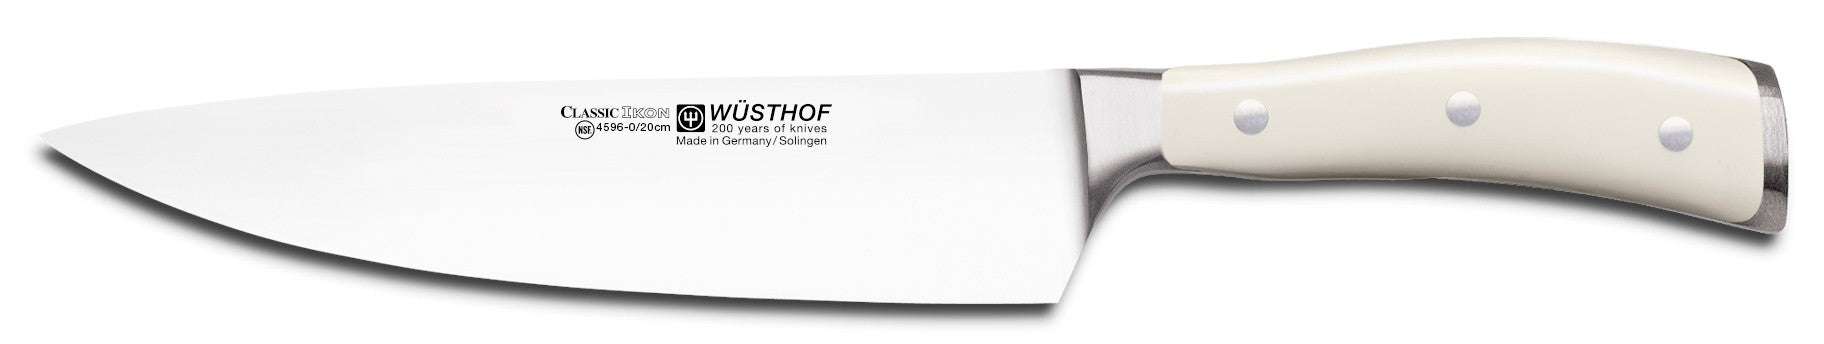 Wusthof Classic IKON Chef's Knife, 8-inch (20cm), Creme - 4596-6-20